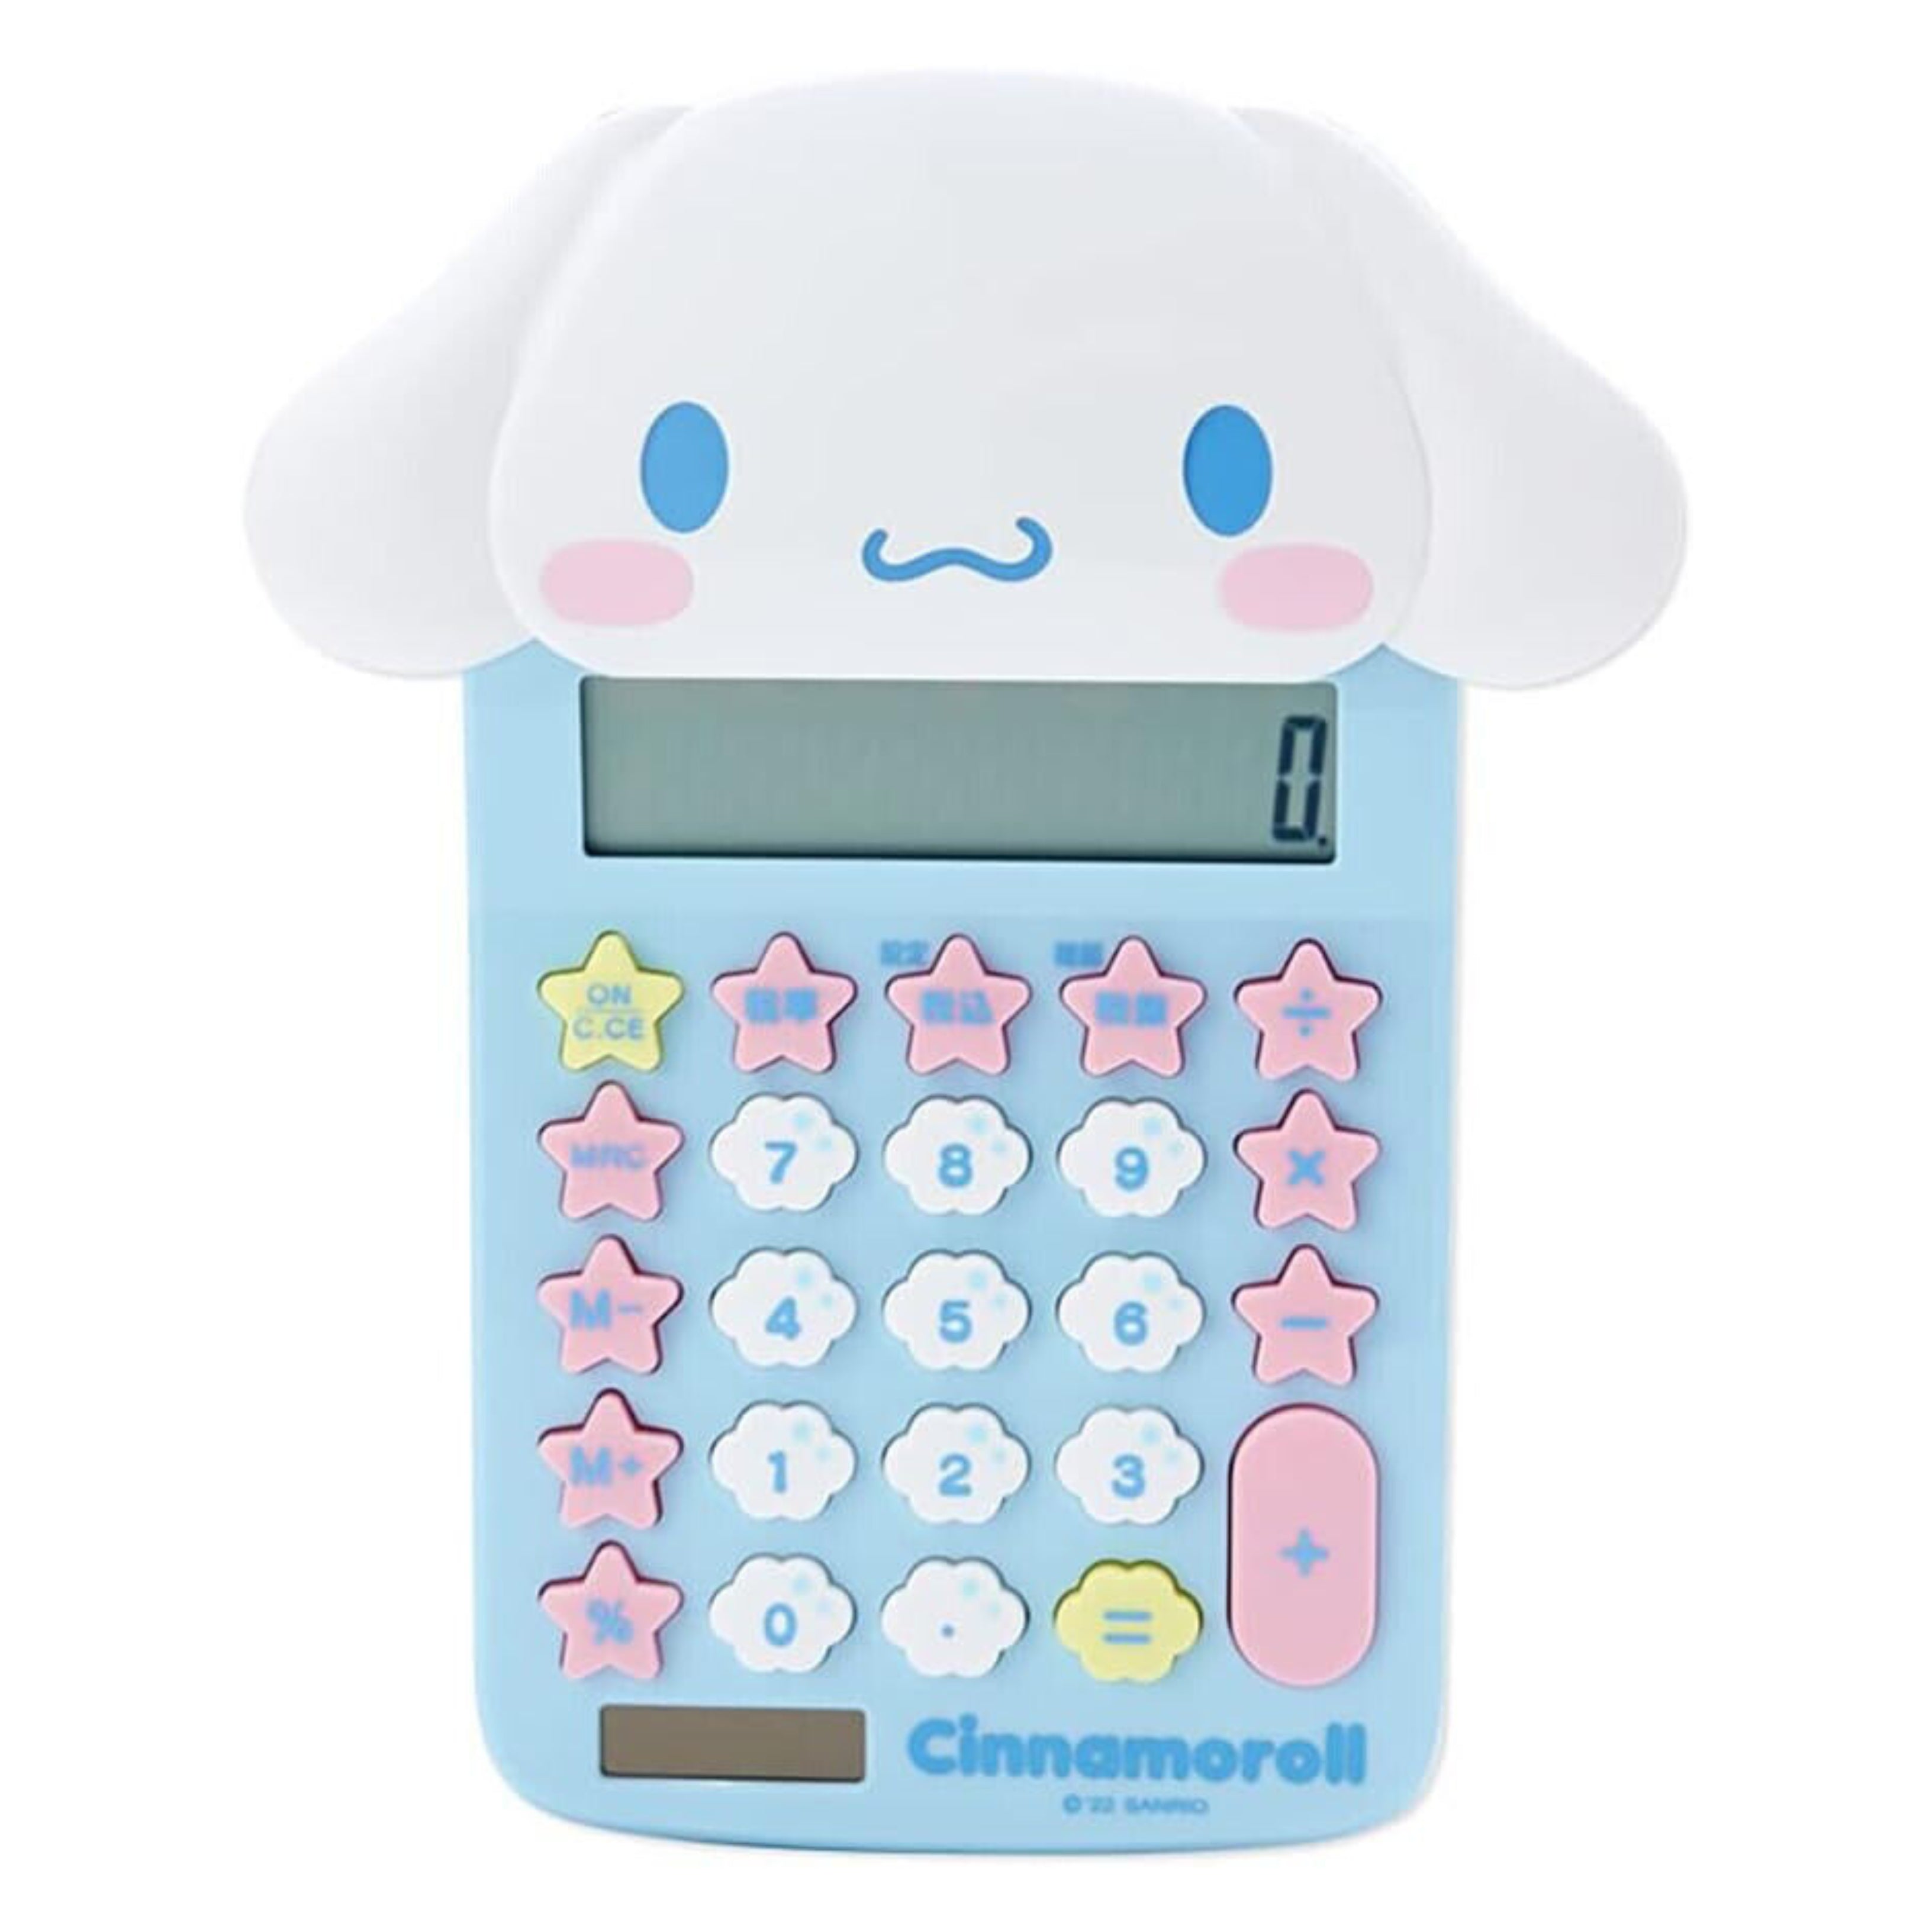 Sanrio Original Cinnamoroll Classic Calculator